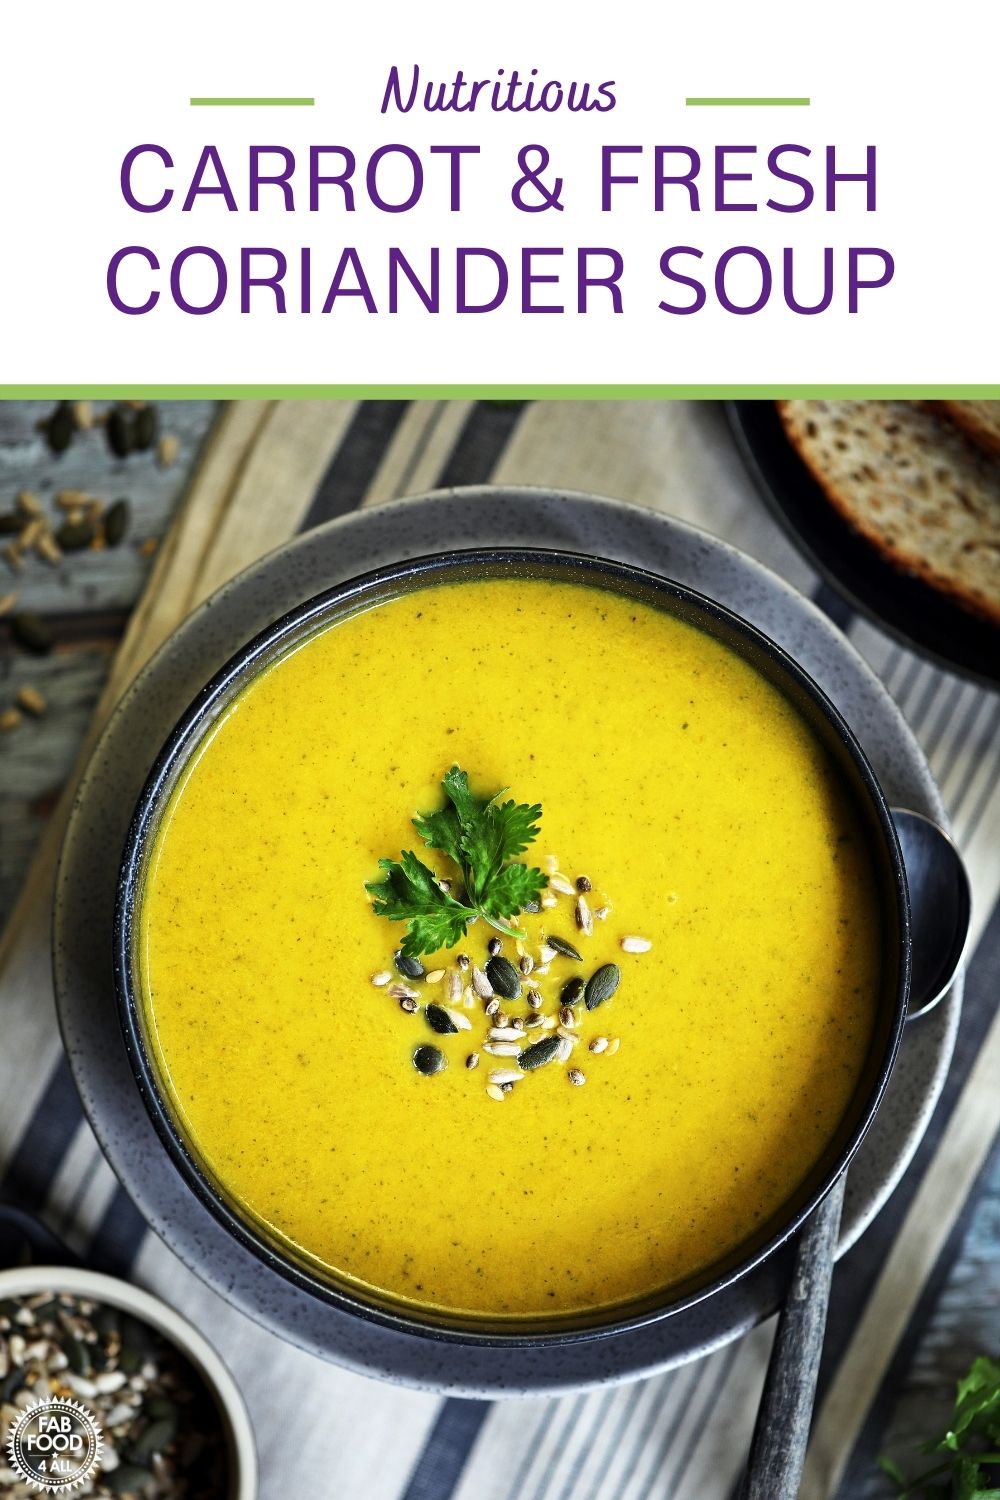 Carrot & Fresh Coriander Soup Pinterest image 2.